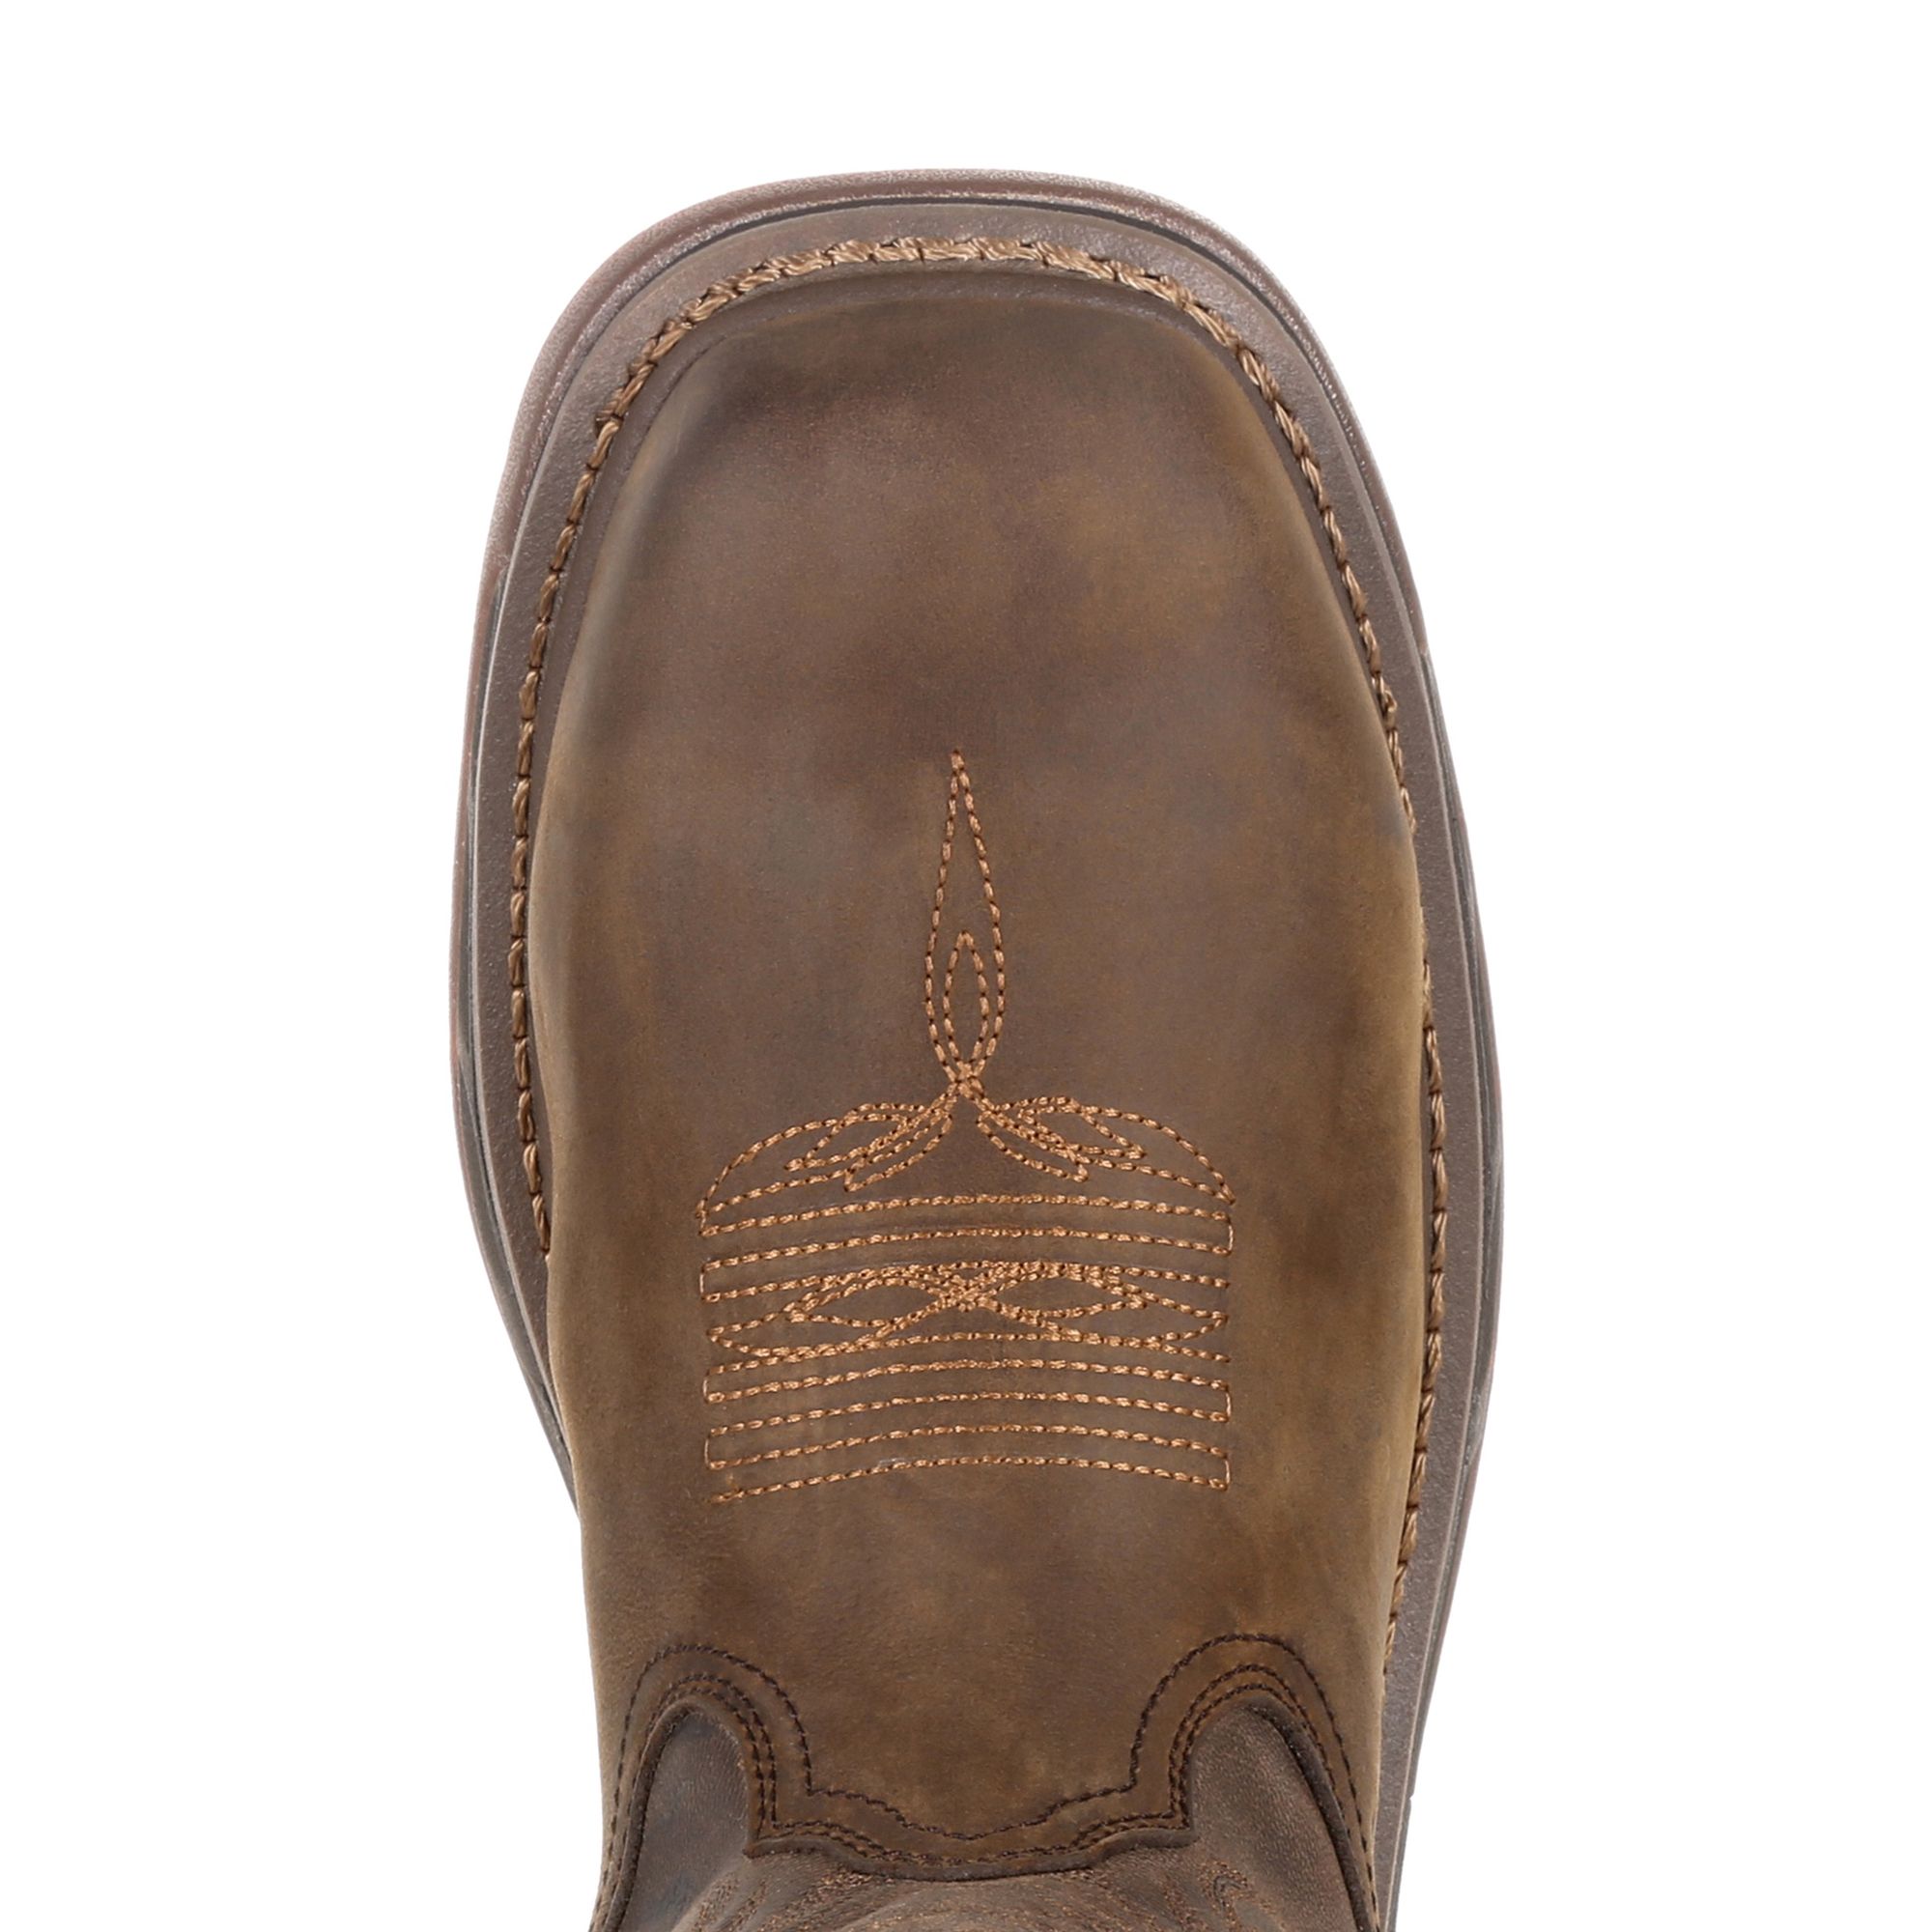 Rocky Men's Square Toe Waterproof Composite Toe Western Boots